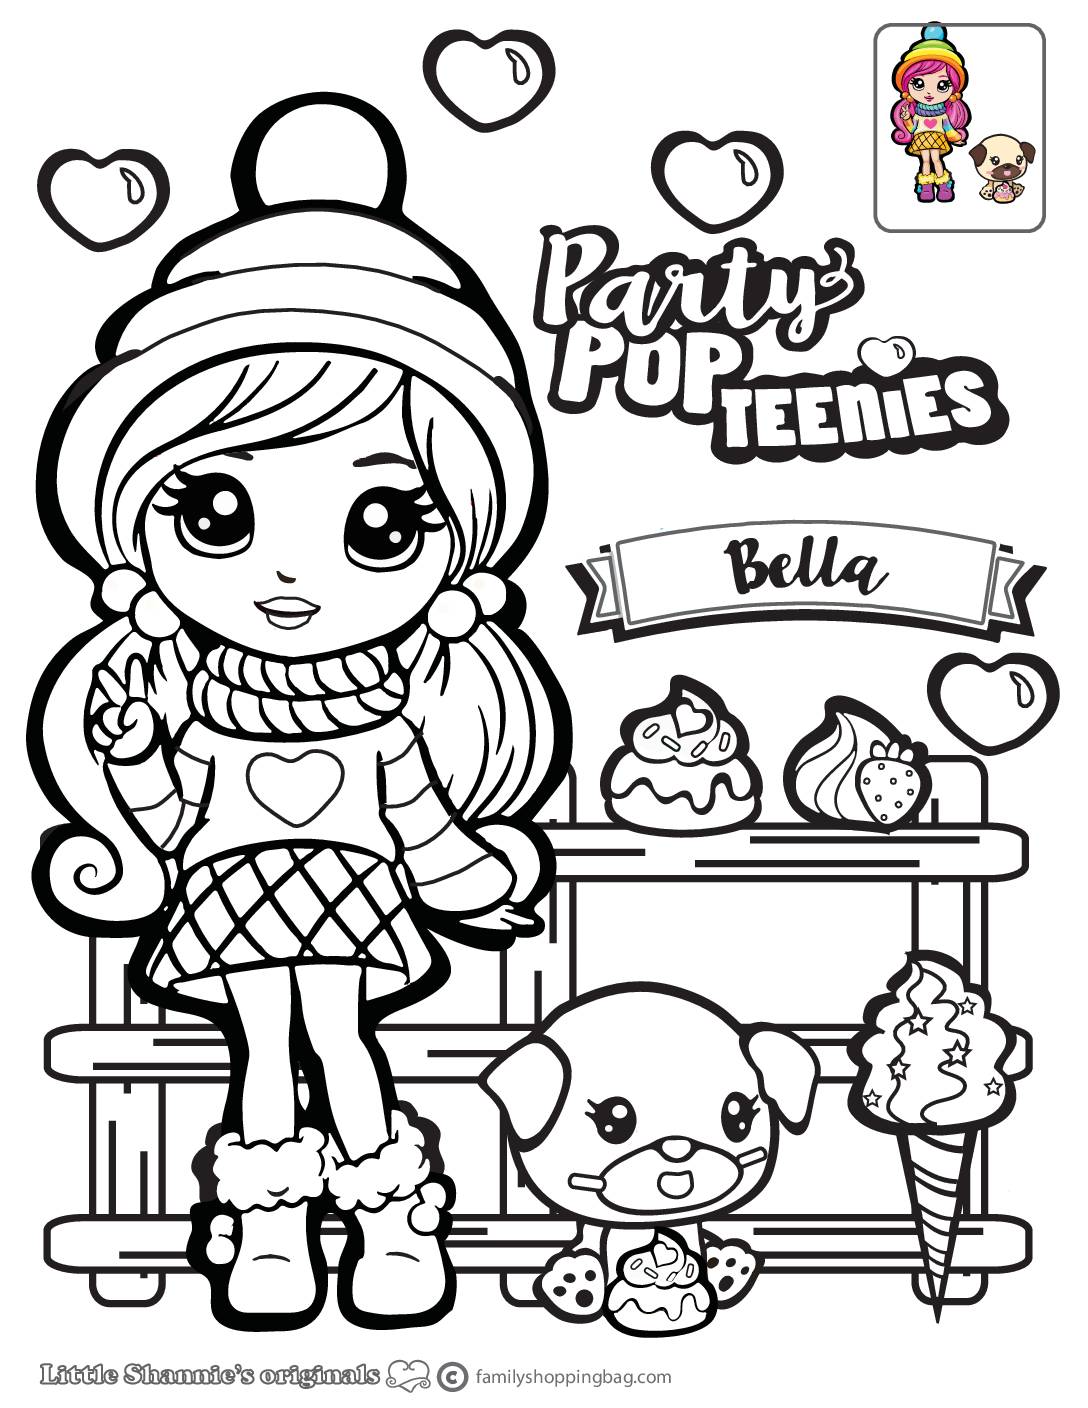 Bella Coloring Page Party Pop Teenies